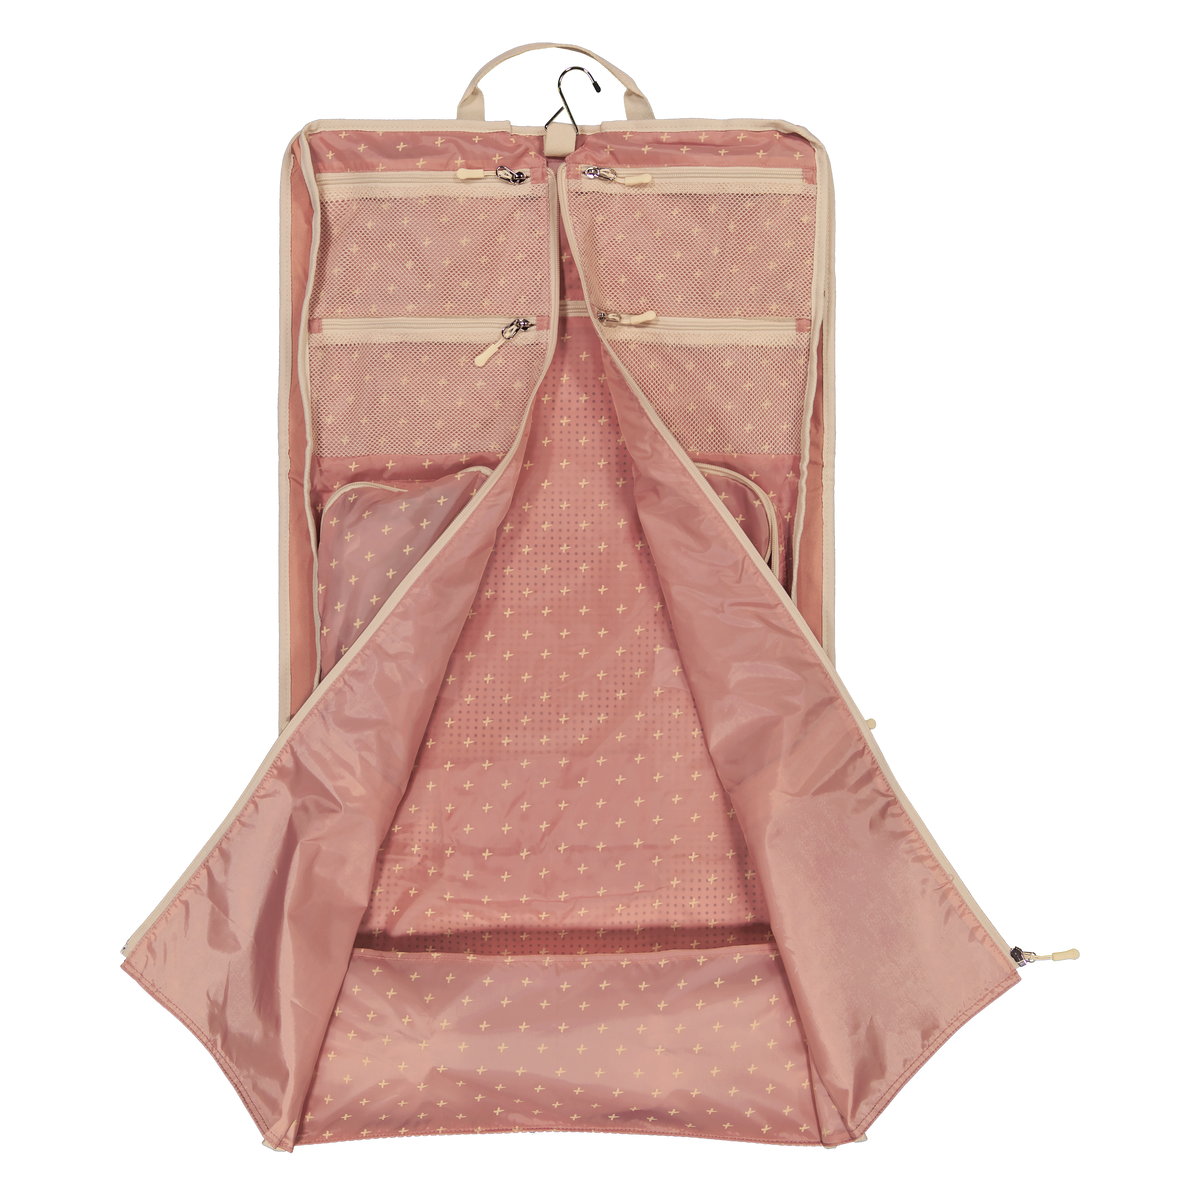 Bag Garment Blossom Pink